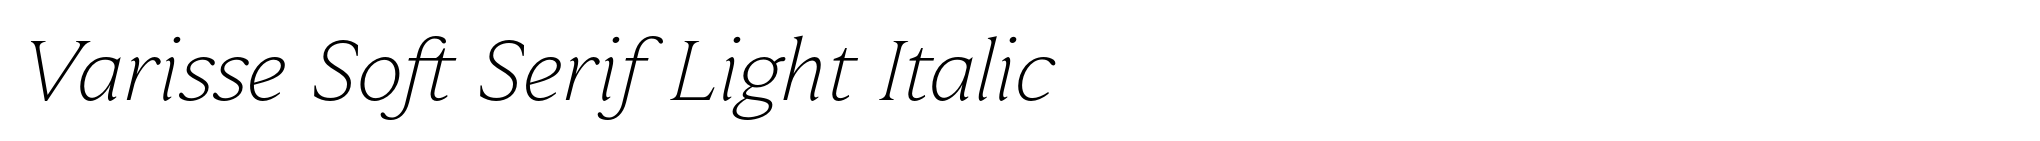 Varisse Soft Serif Light Italic image